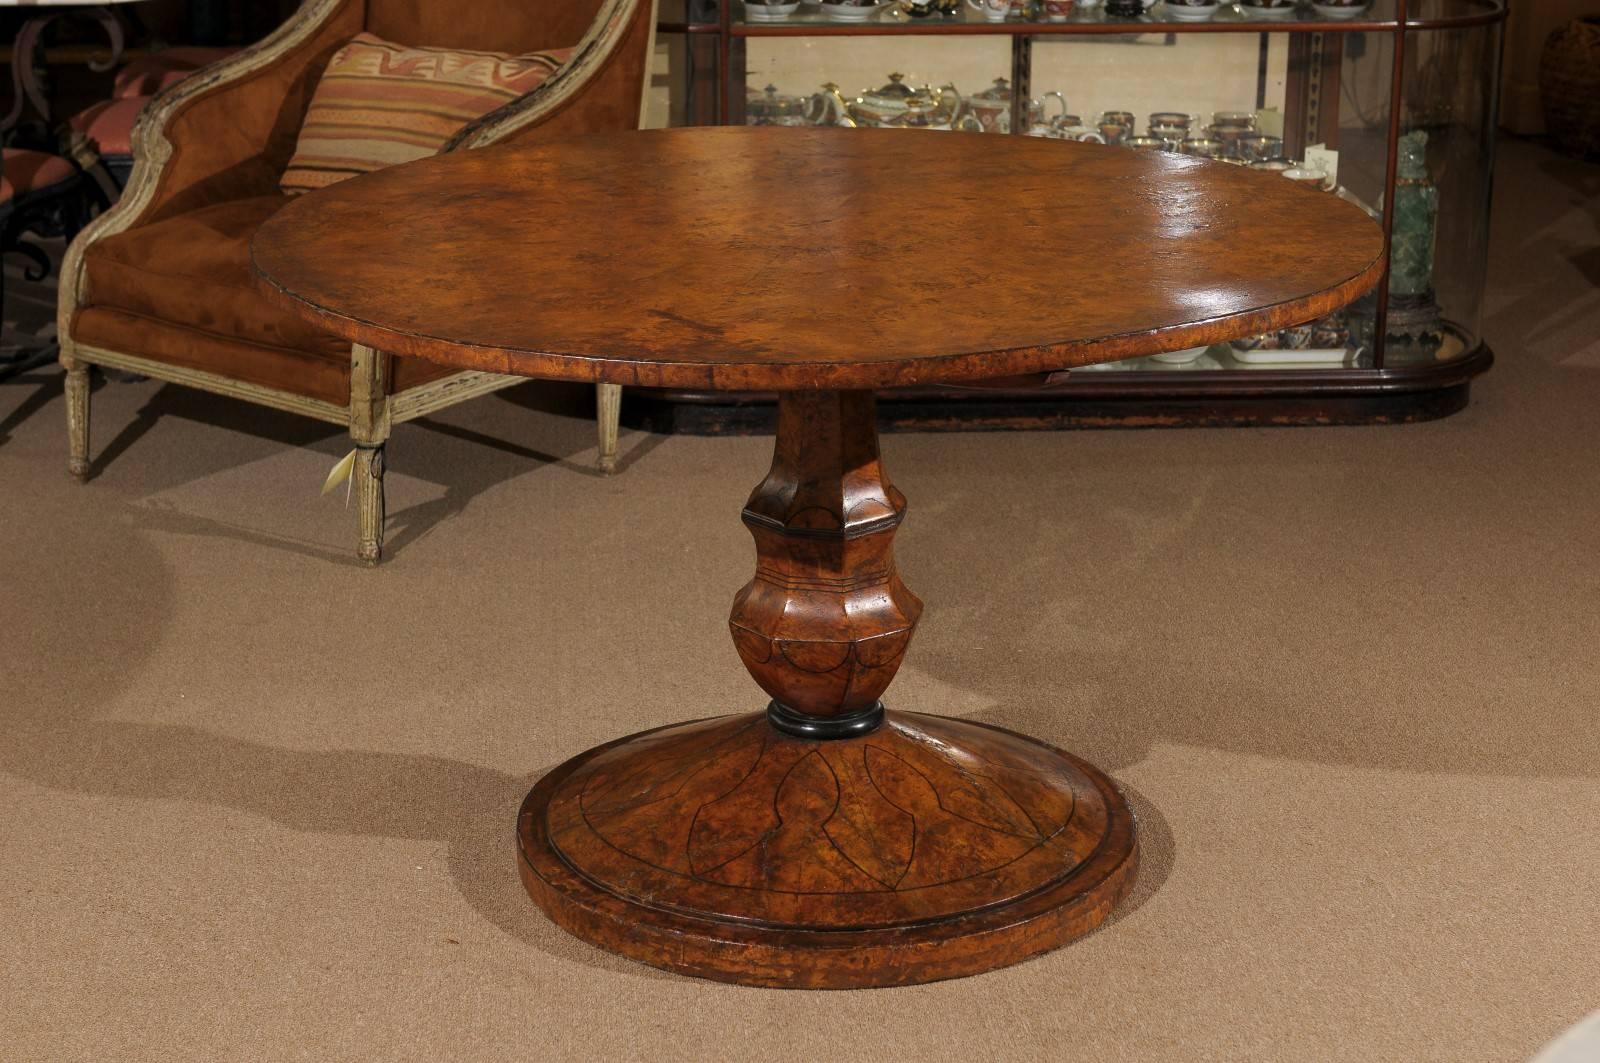 Biedermeier burled elm centre table on pedestal base with ebonized string inlay, 19th century continental.